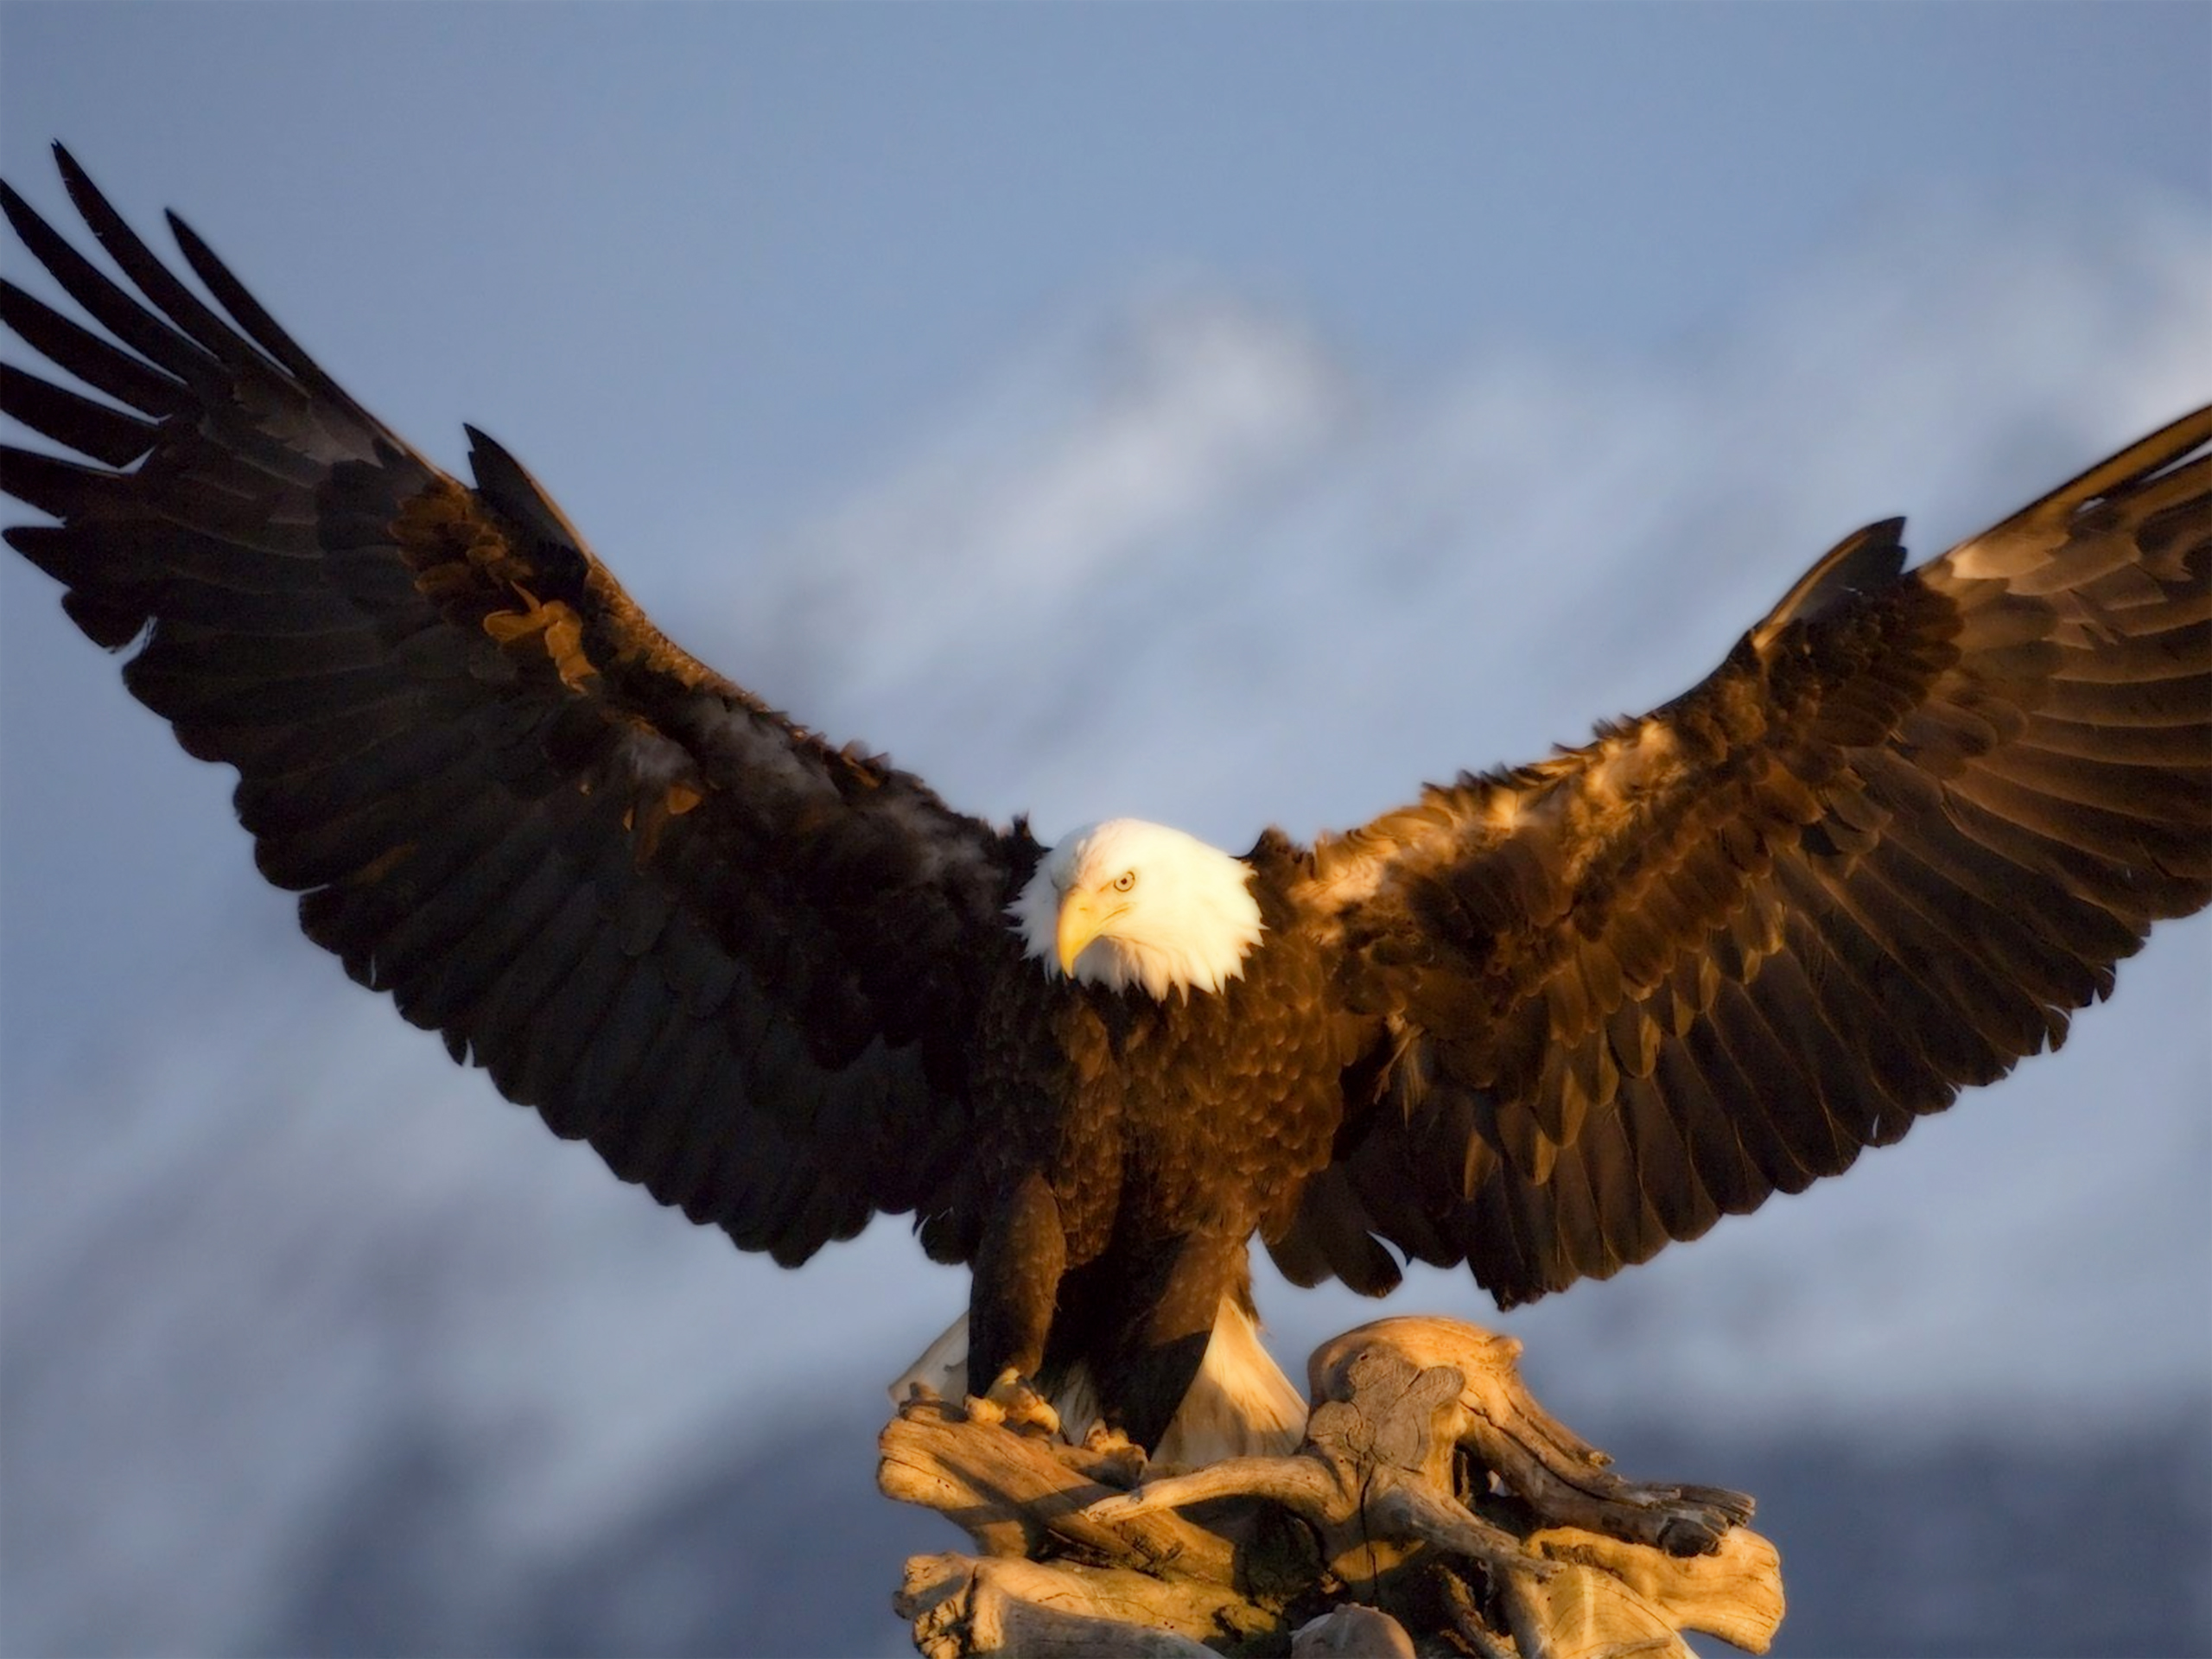 313367 descargar imagen animales, aves, águila calva, águila: fondos de pantalla y protectores de pantalla gratis